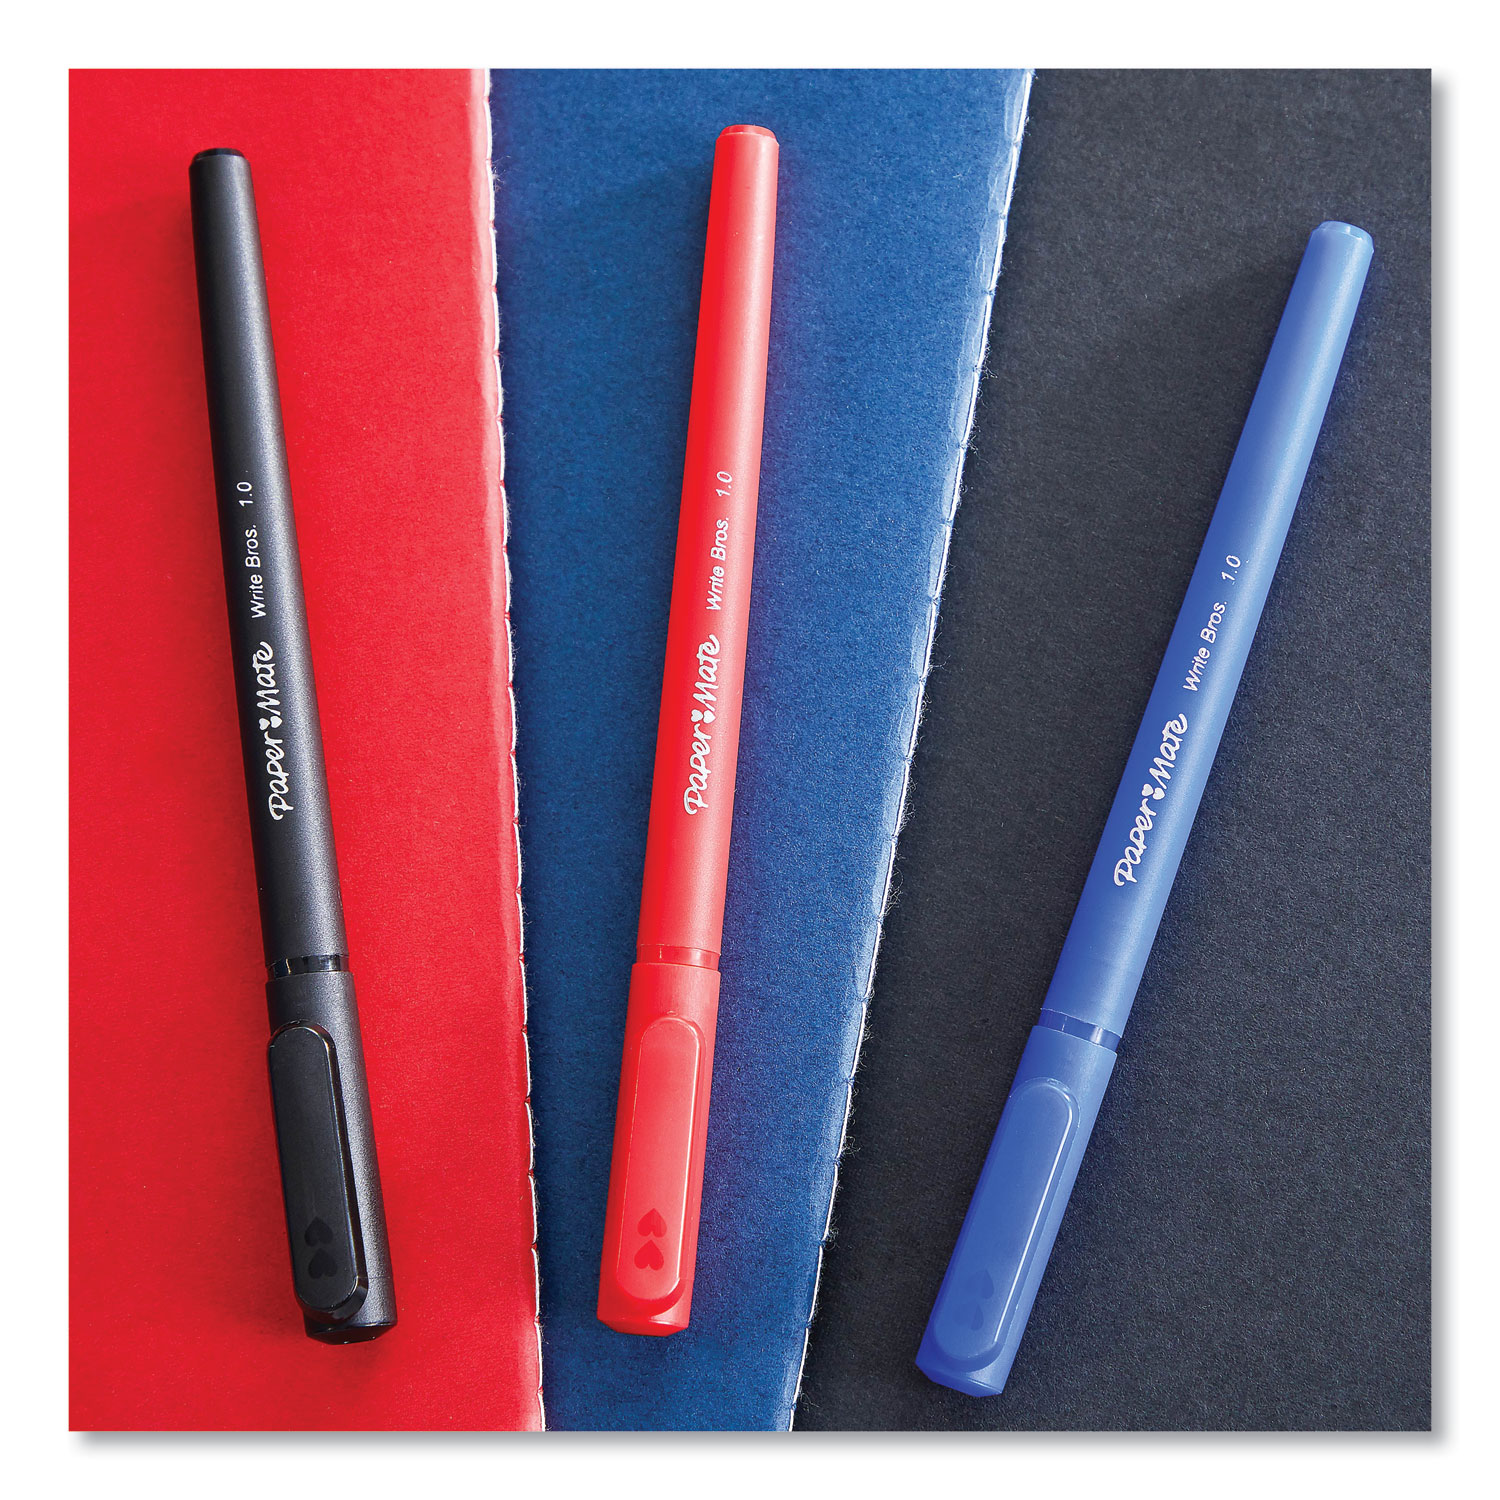 Write Bros. Ballpoint Pen, Stick, Fine 0.8 mm, Black Ink, Black Barrel,  Dozen - BOSS Office and Computer Products